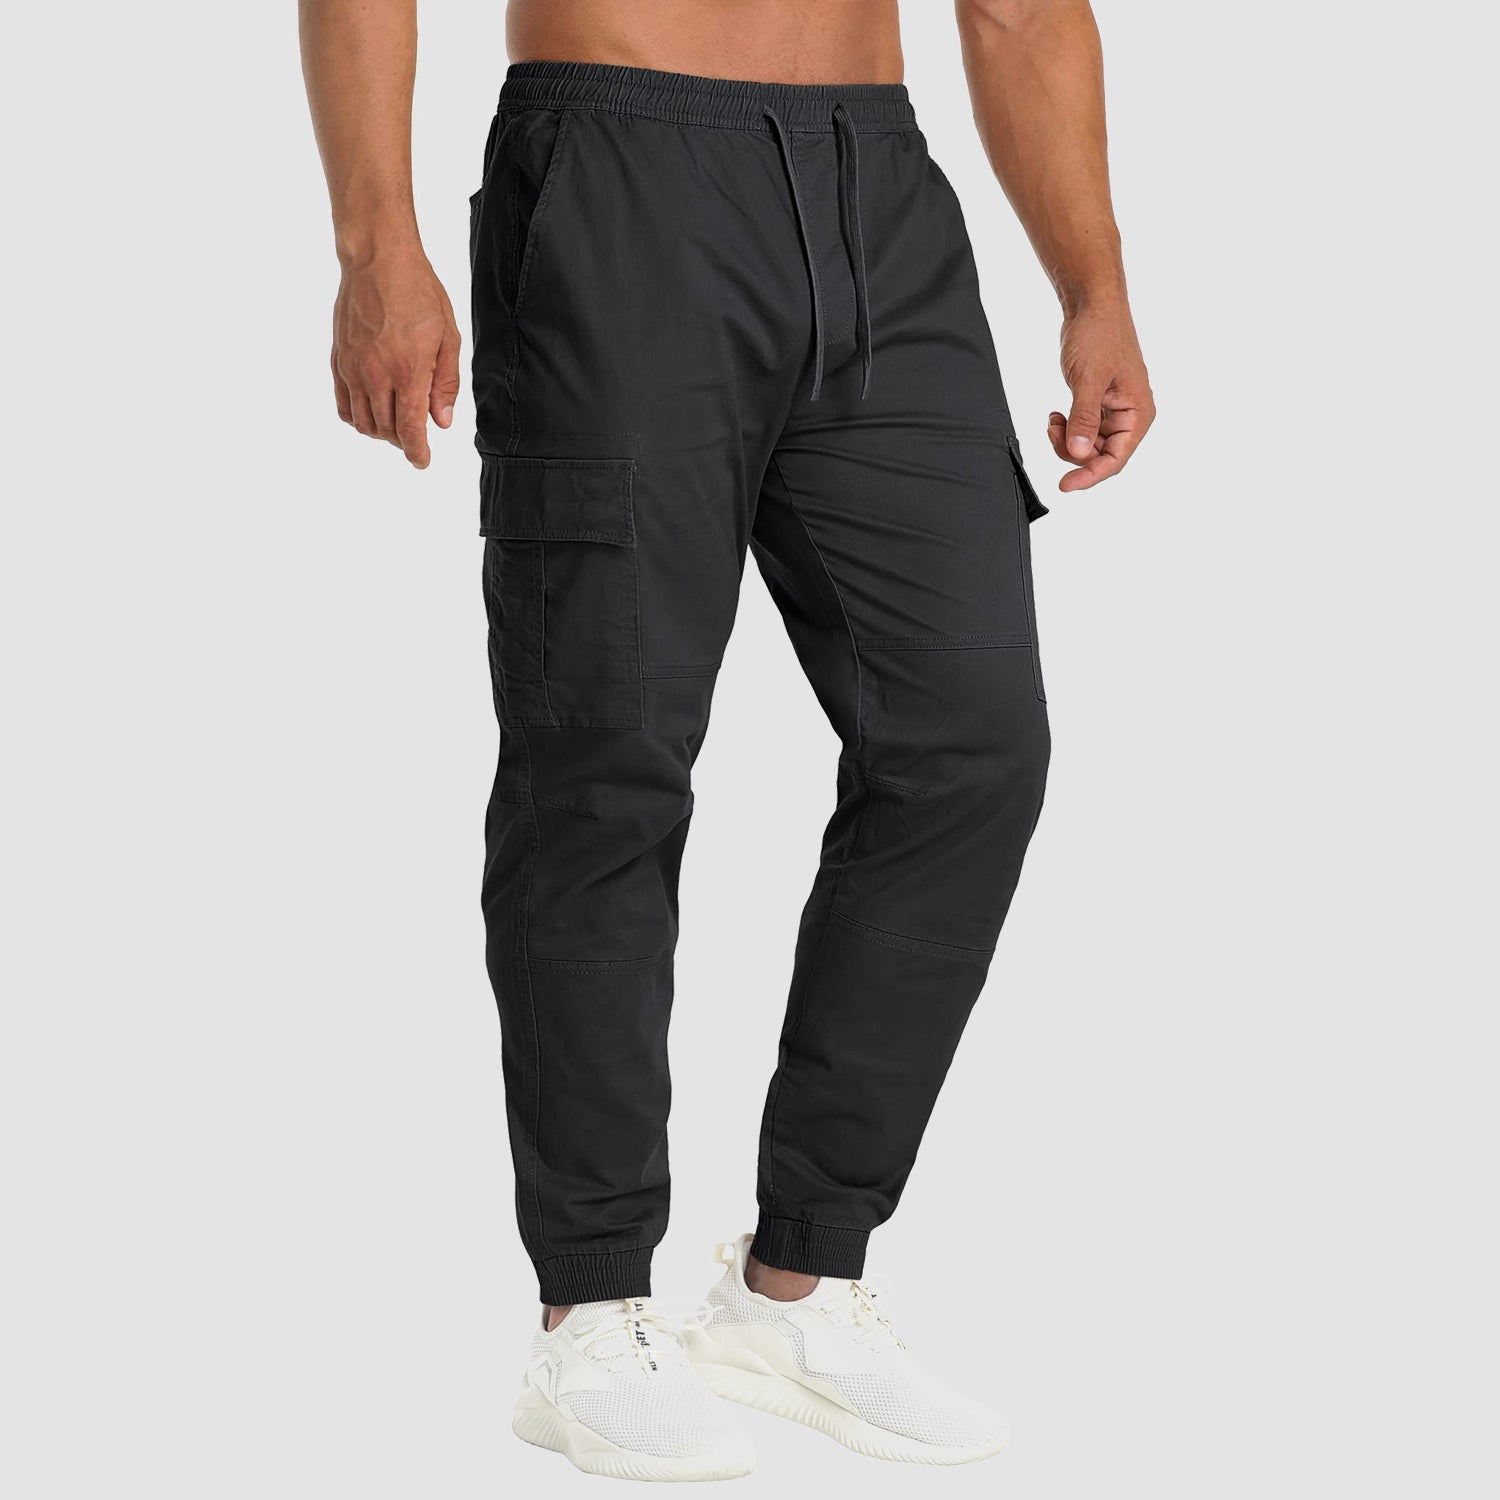 MAGCOMSEN Men's Cargo Pants Elastic Waist Quick Dry Trousers, Black / 40